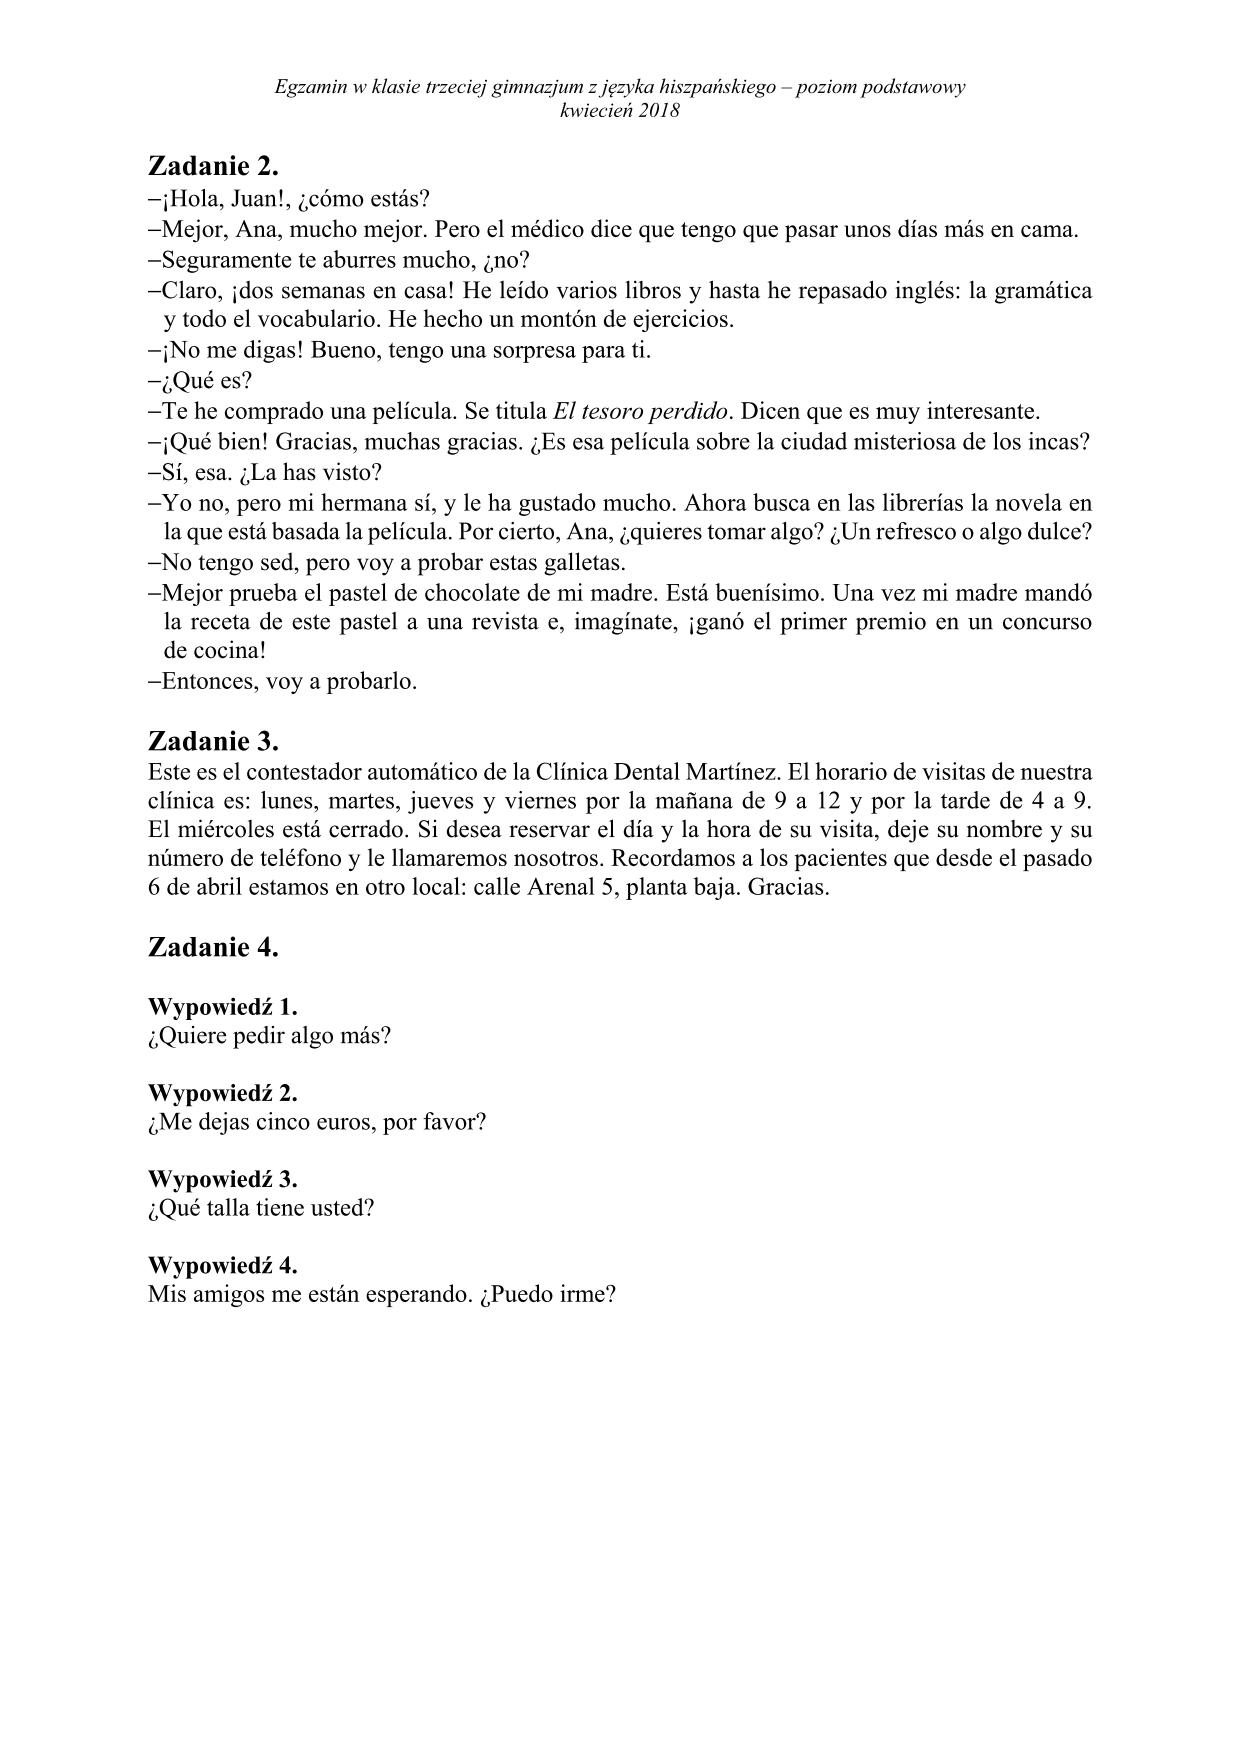 transkrypcja-hiszpanski-poziom-podstawowy-egzamin-gimnazjalny-2018 - 2